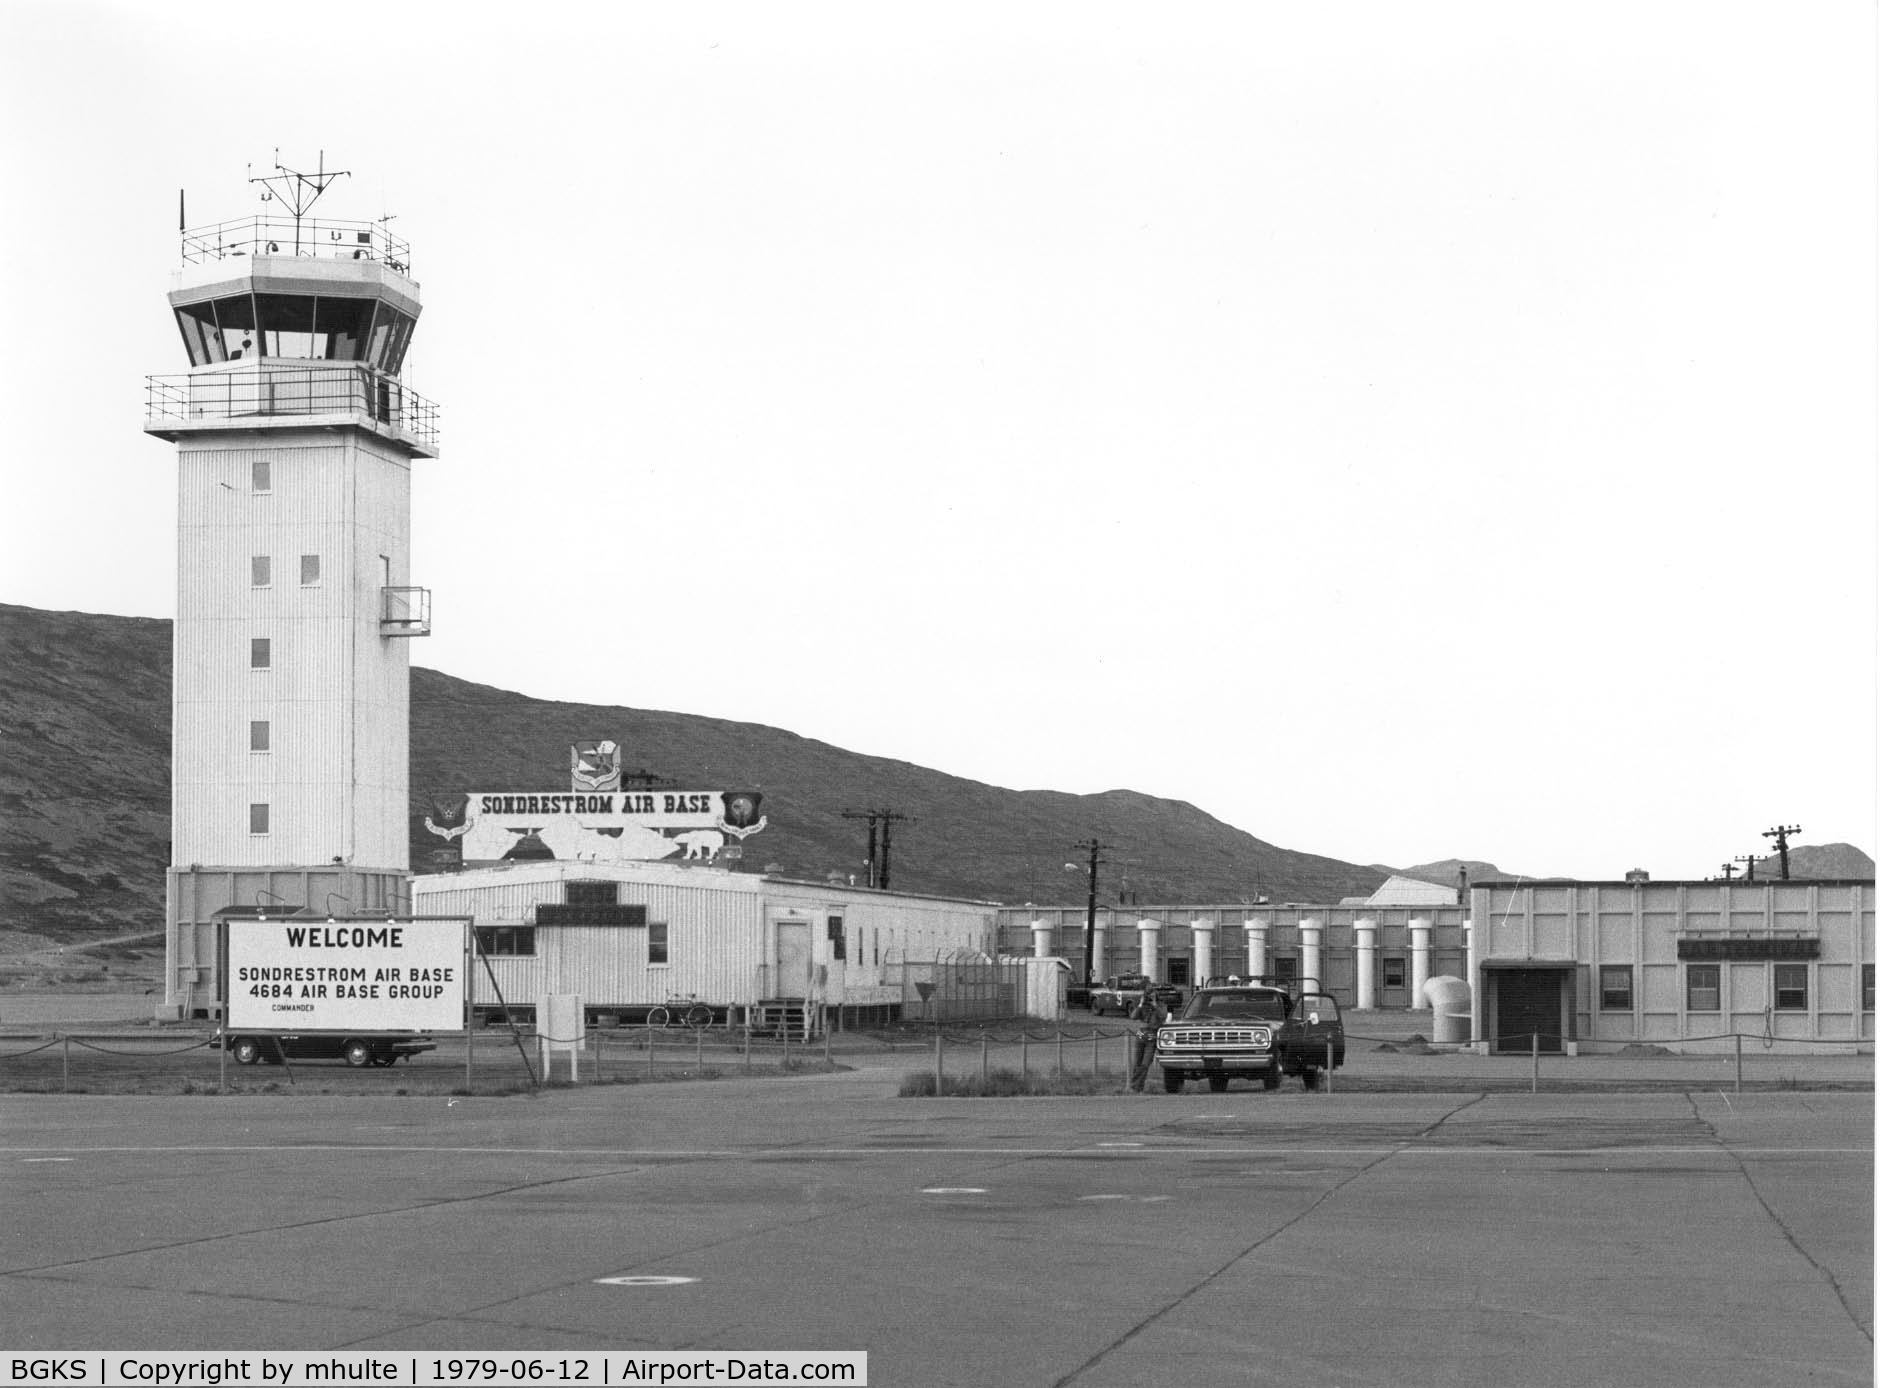 Kangersuatsiaq Heliport Airport, Kangersuatsiaq Greenland (BGKS) - Picture taken of Sonderstronfjord Air Base summer 1979